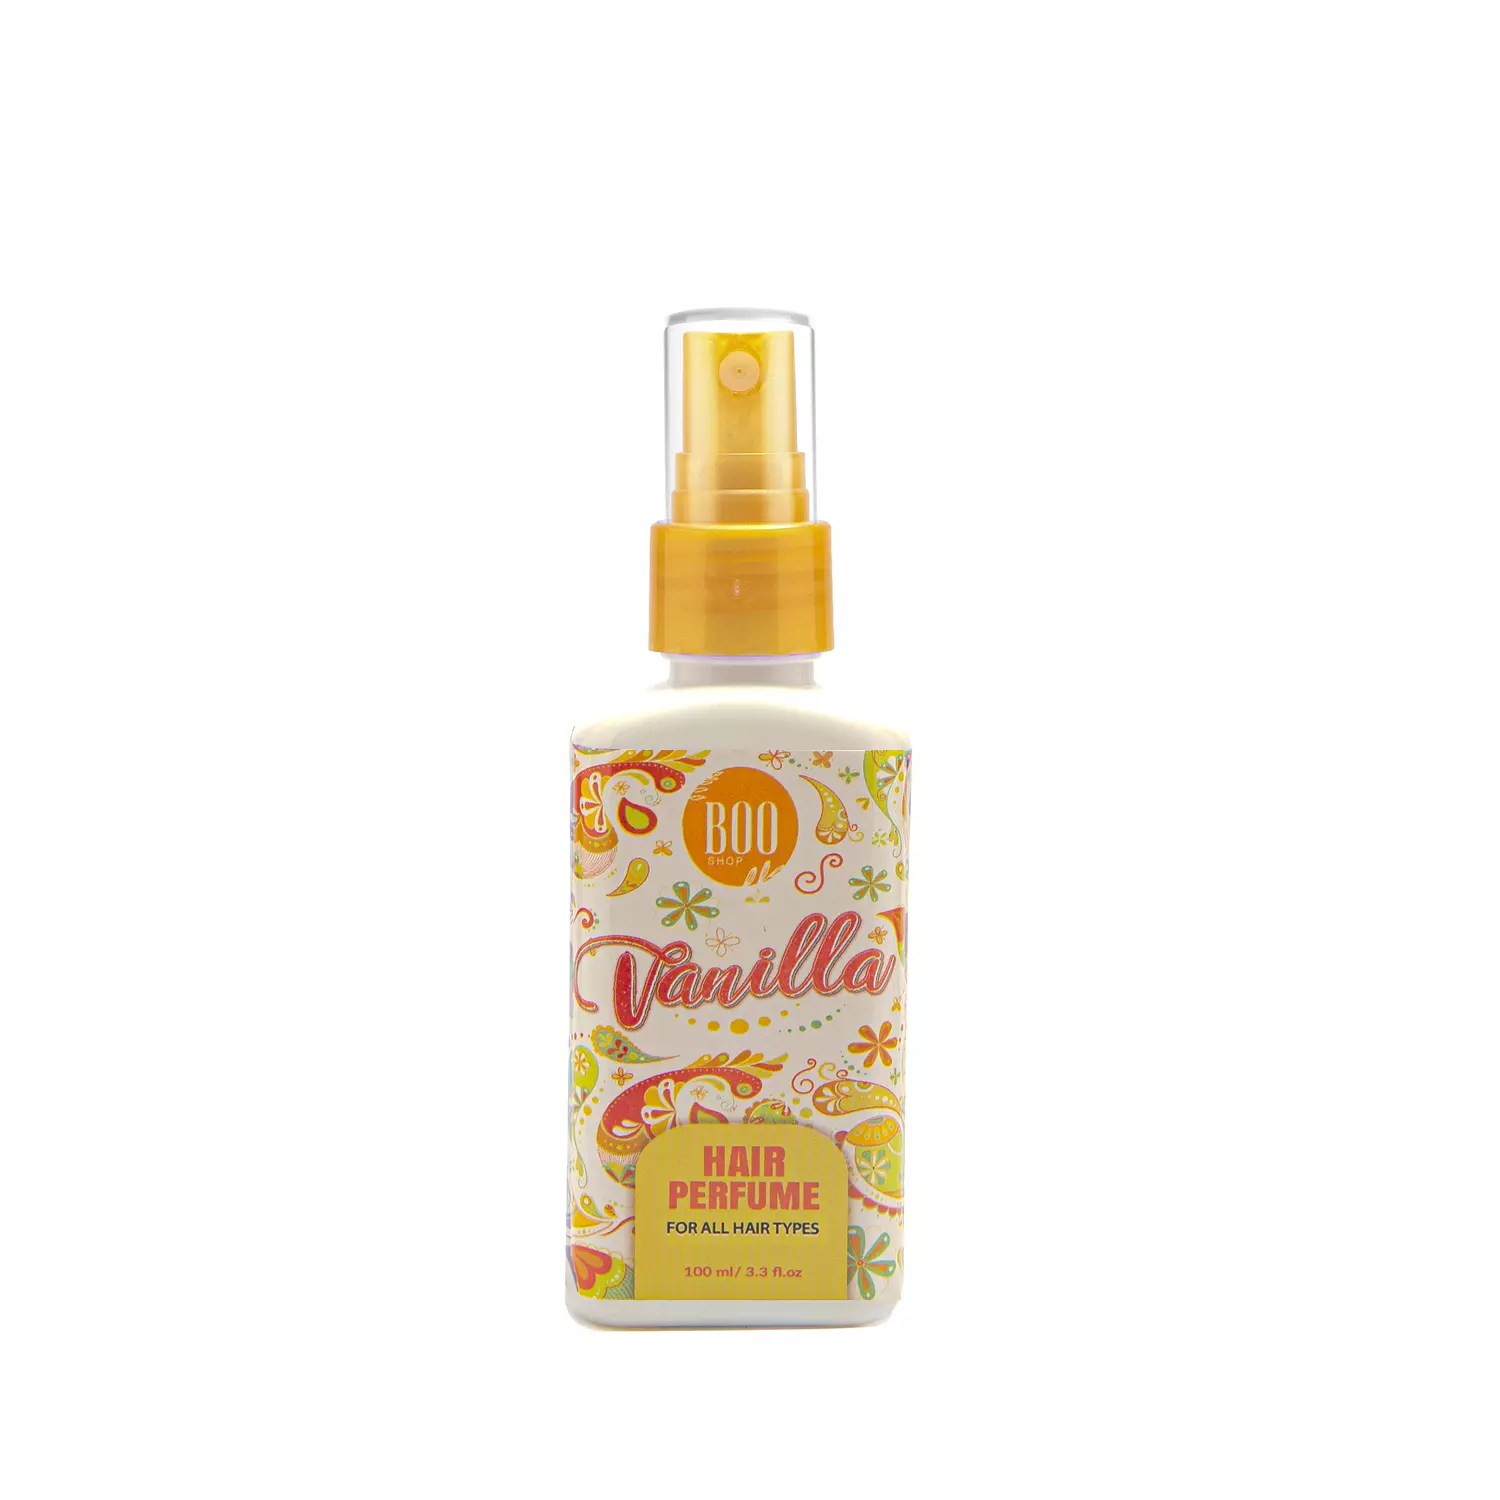 Hair perfume mist - vanilla scent 100ml hover image